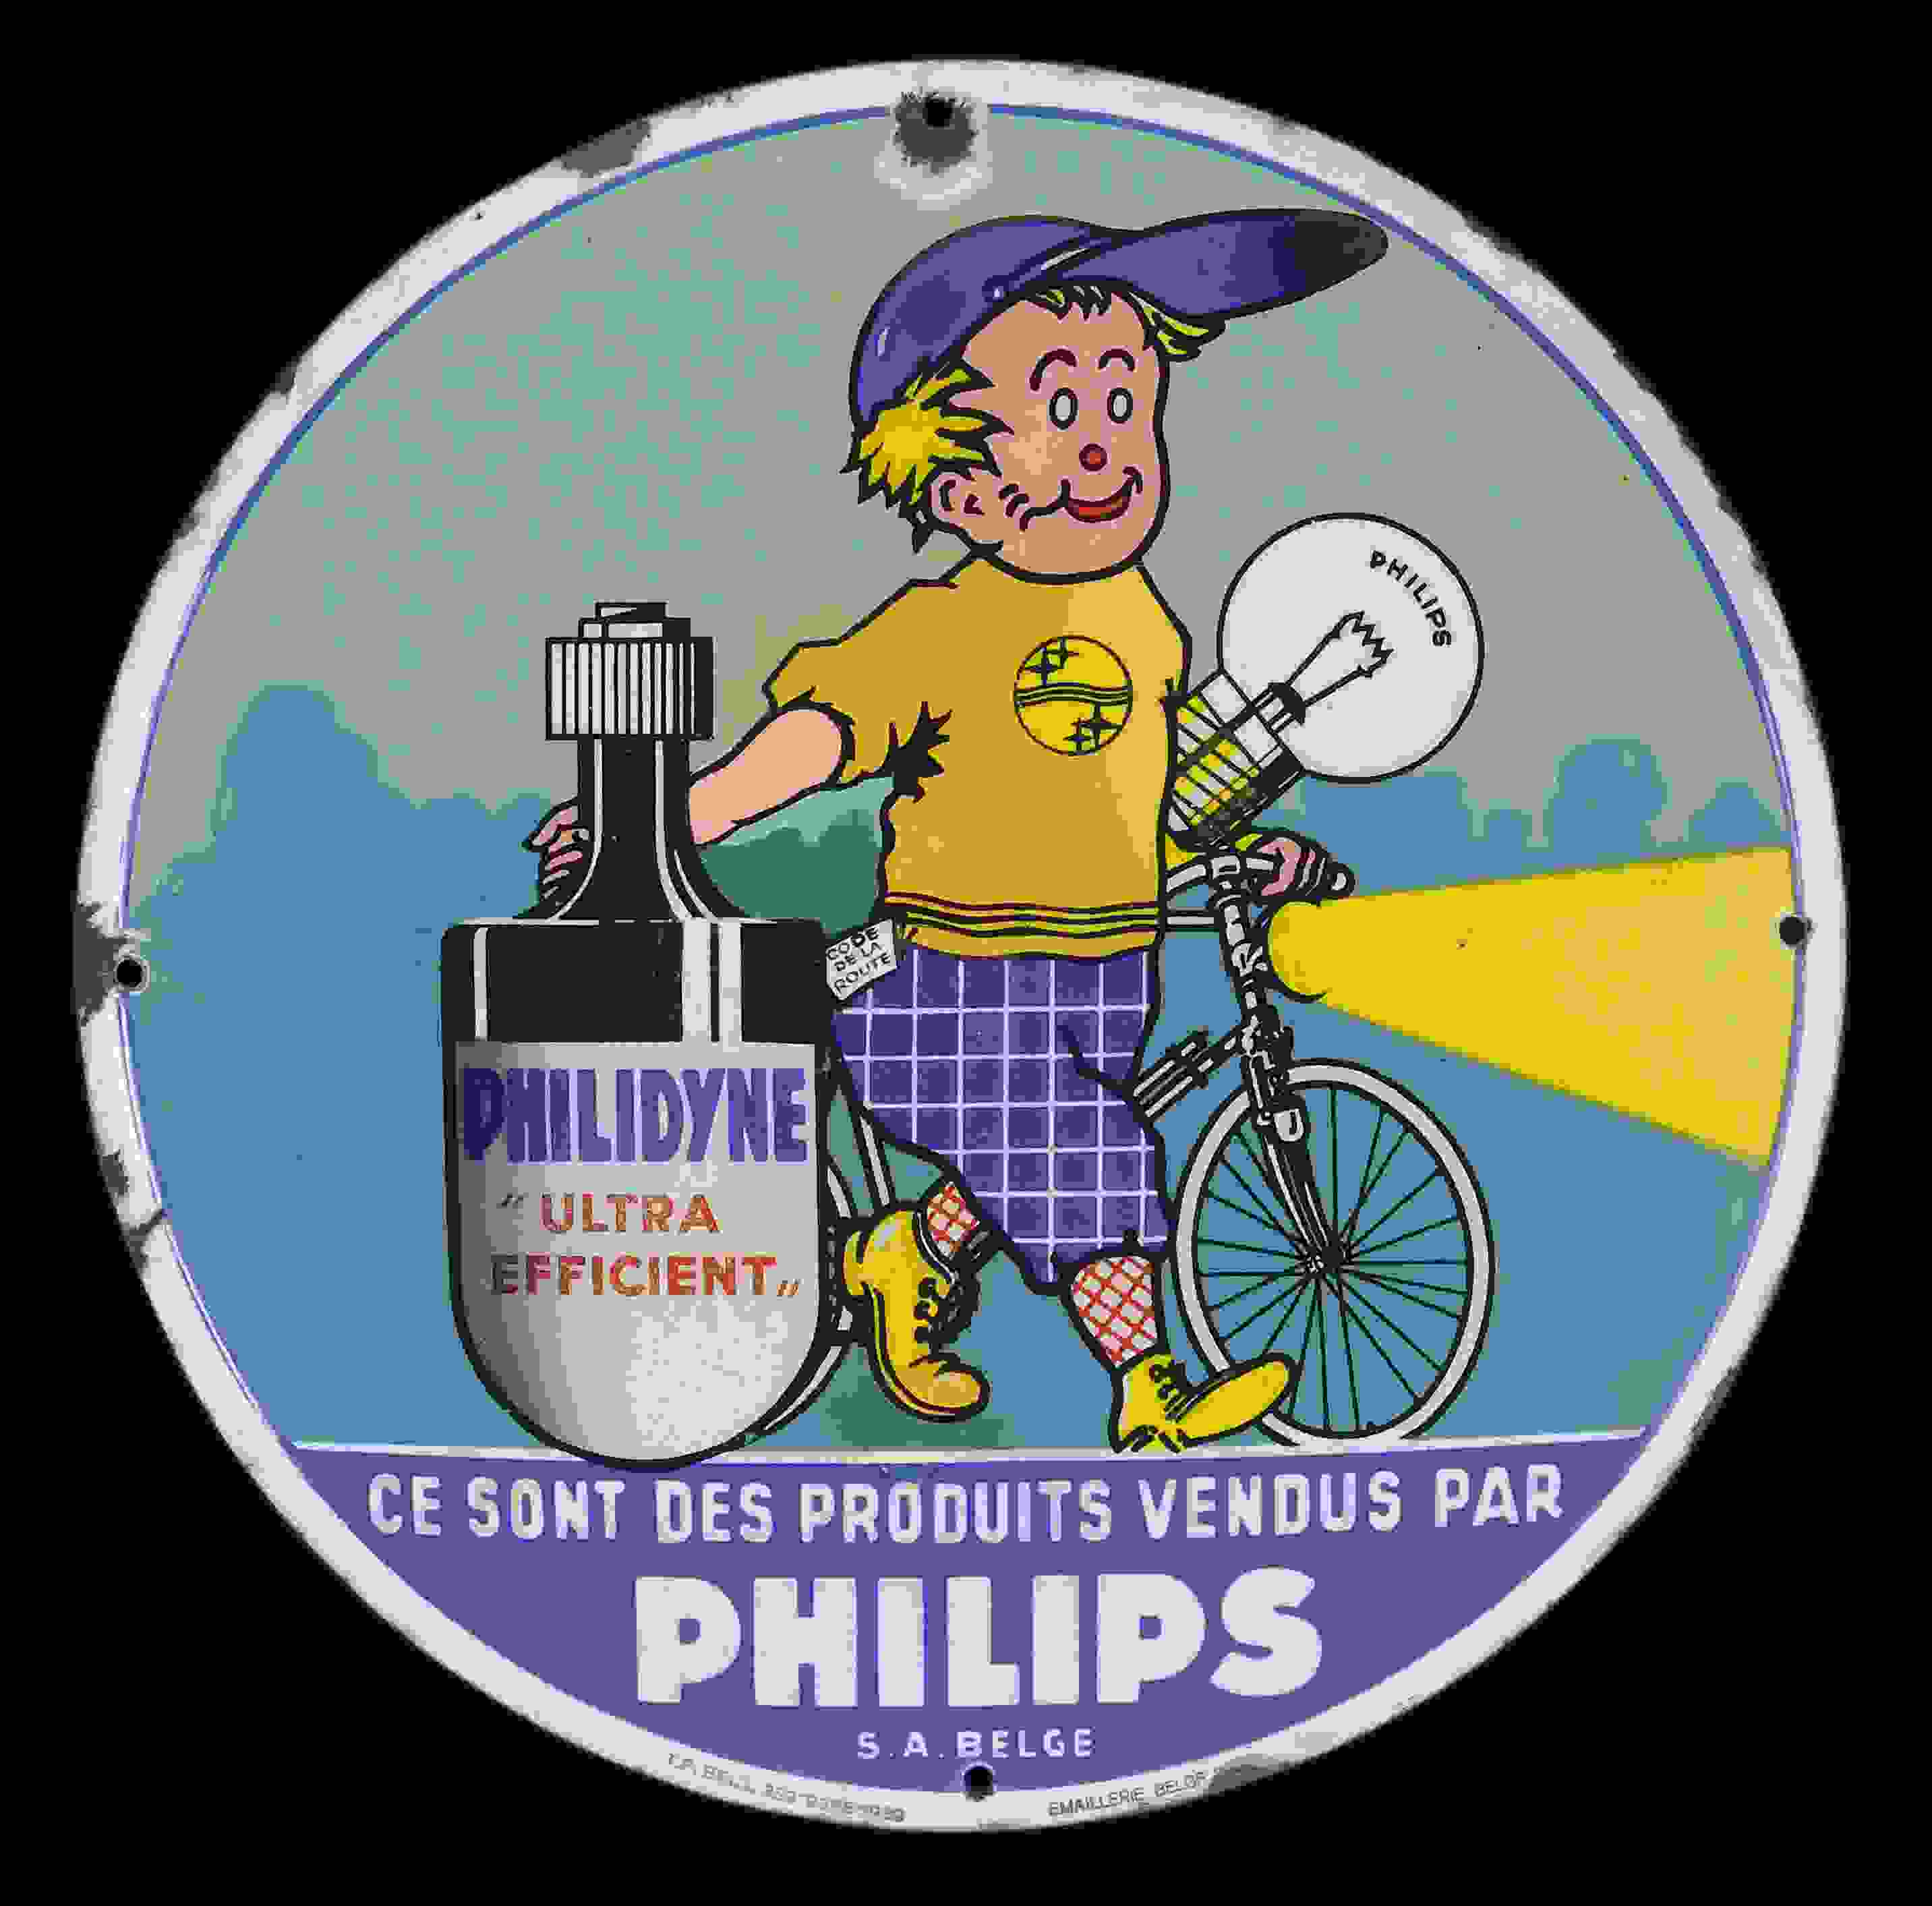 Philips Philidyne 